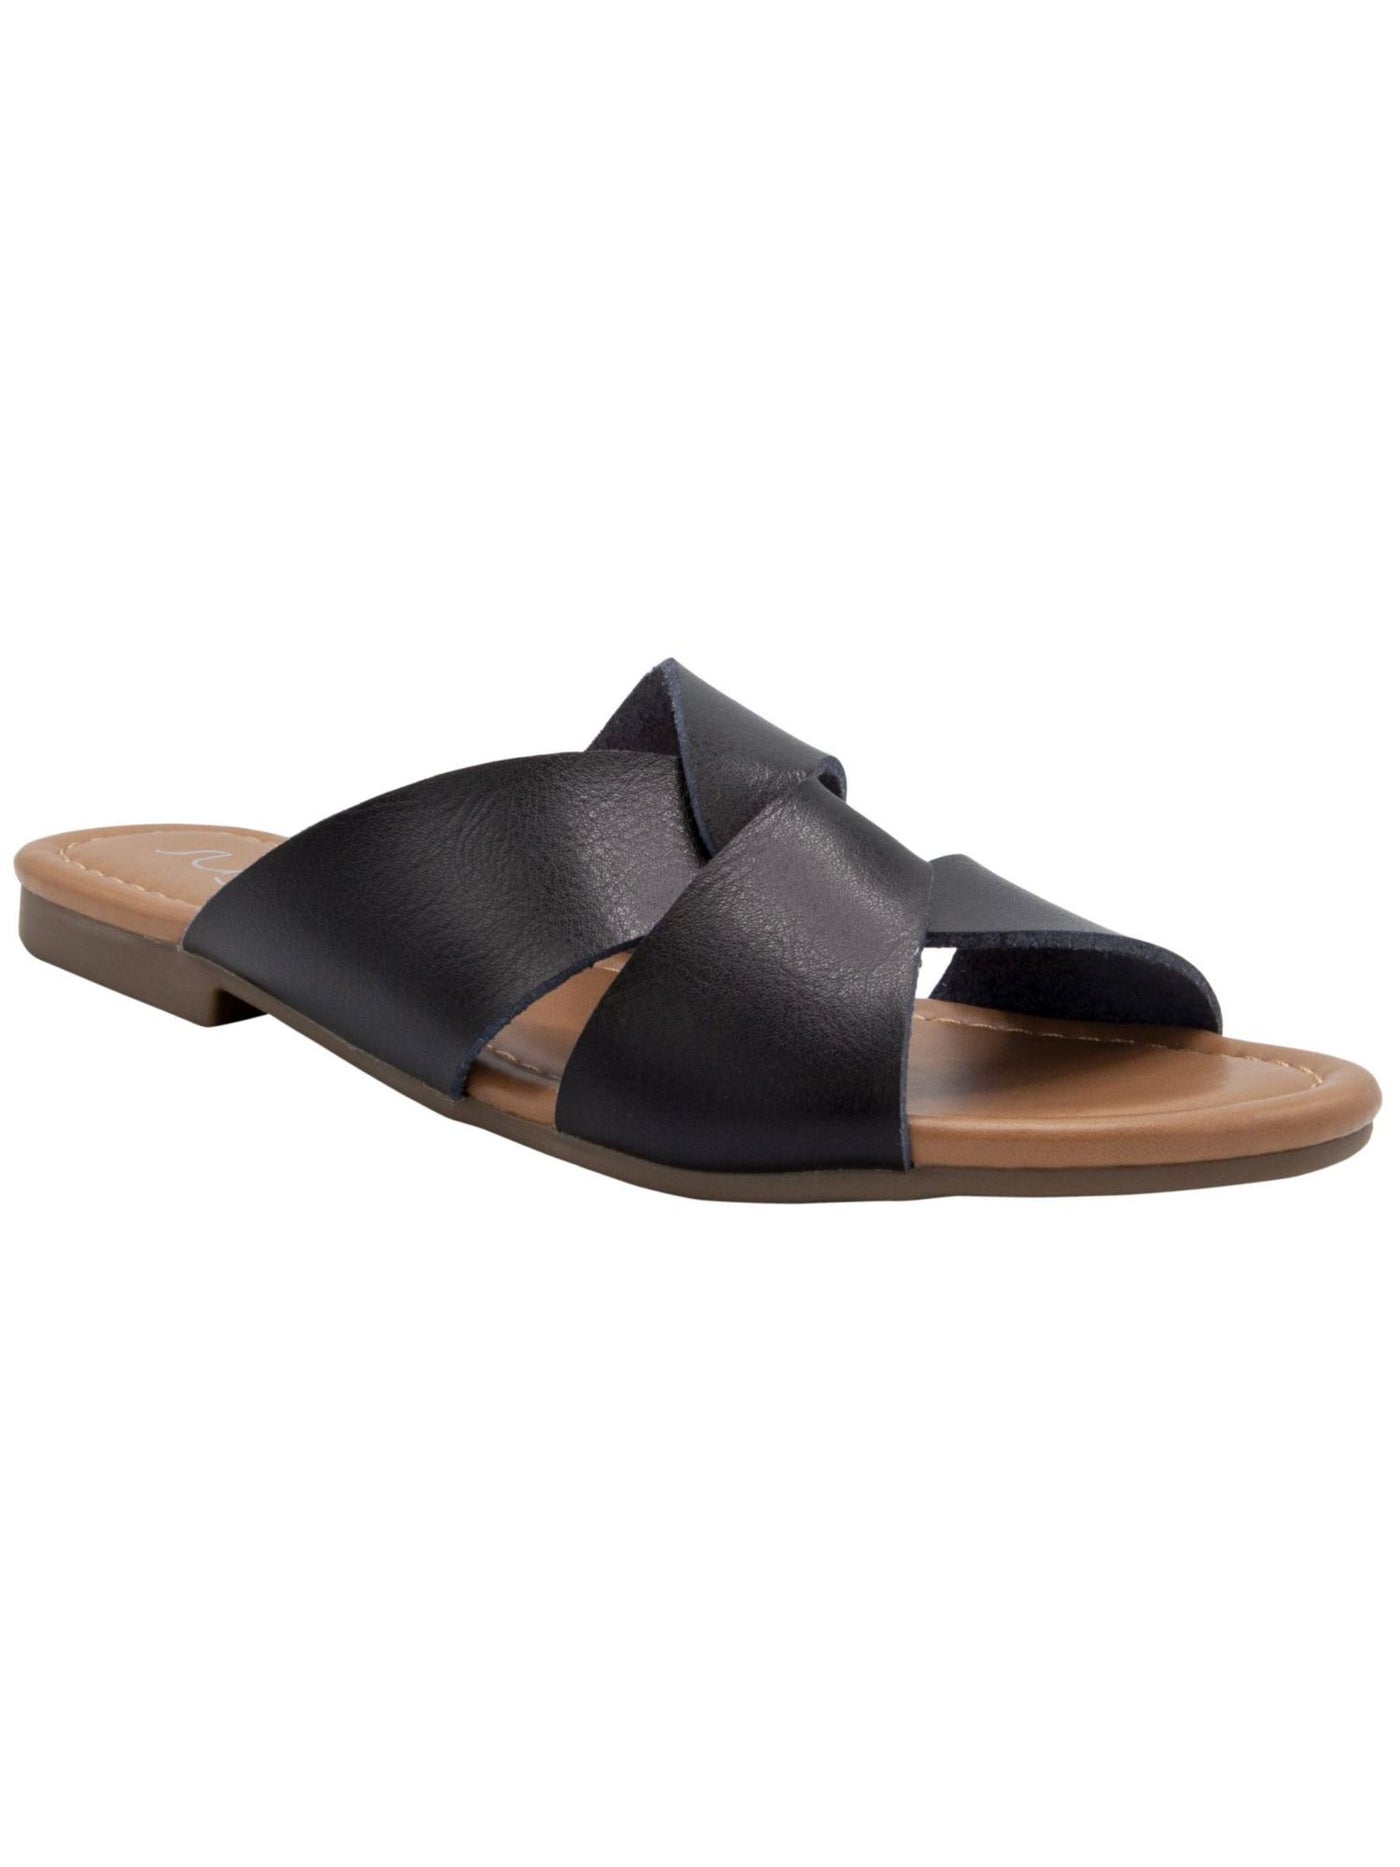 SUGAR Womens Black Knotted Design Comfort Woven Olena Round Toe Block Heel Slip On Slide Sandals Shoes 8.5 M